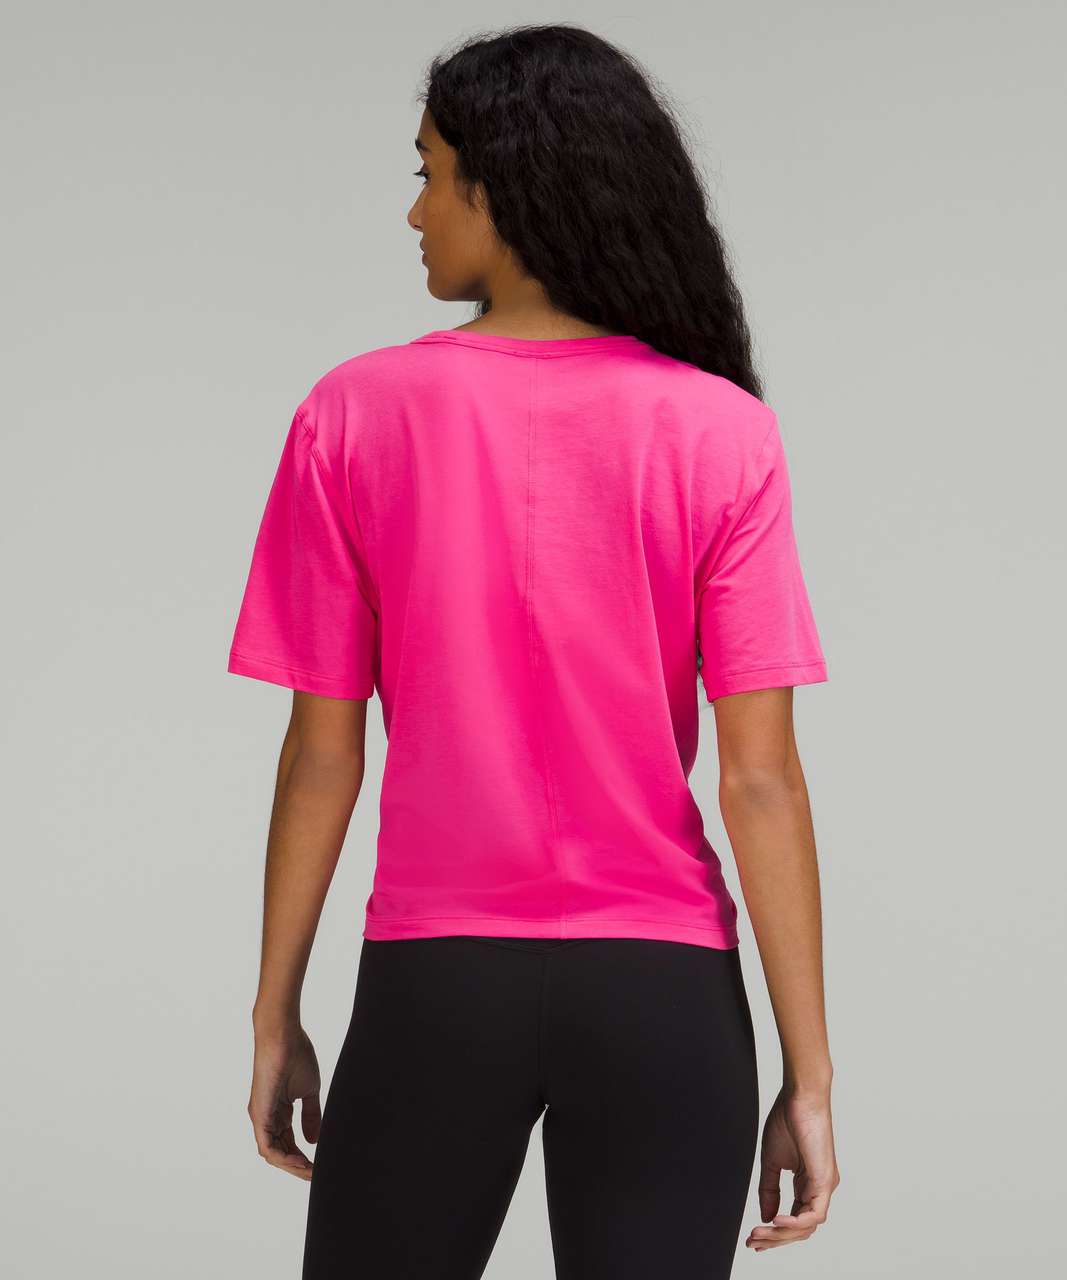 Nwt Lululemon Align Tee Shirt Pink Size 6 Plyc Pink Philippines